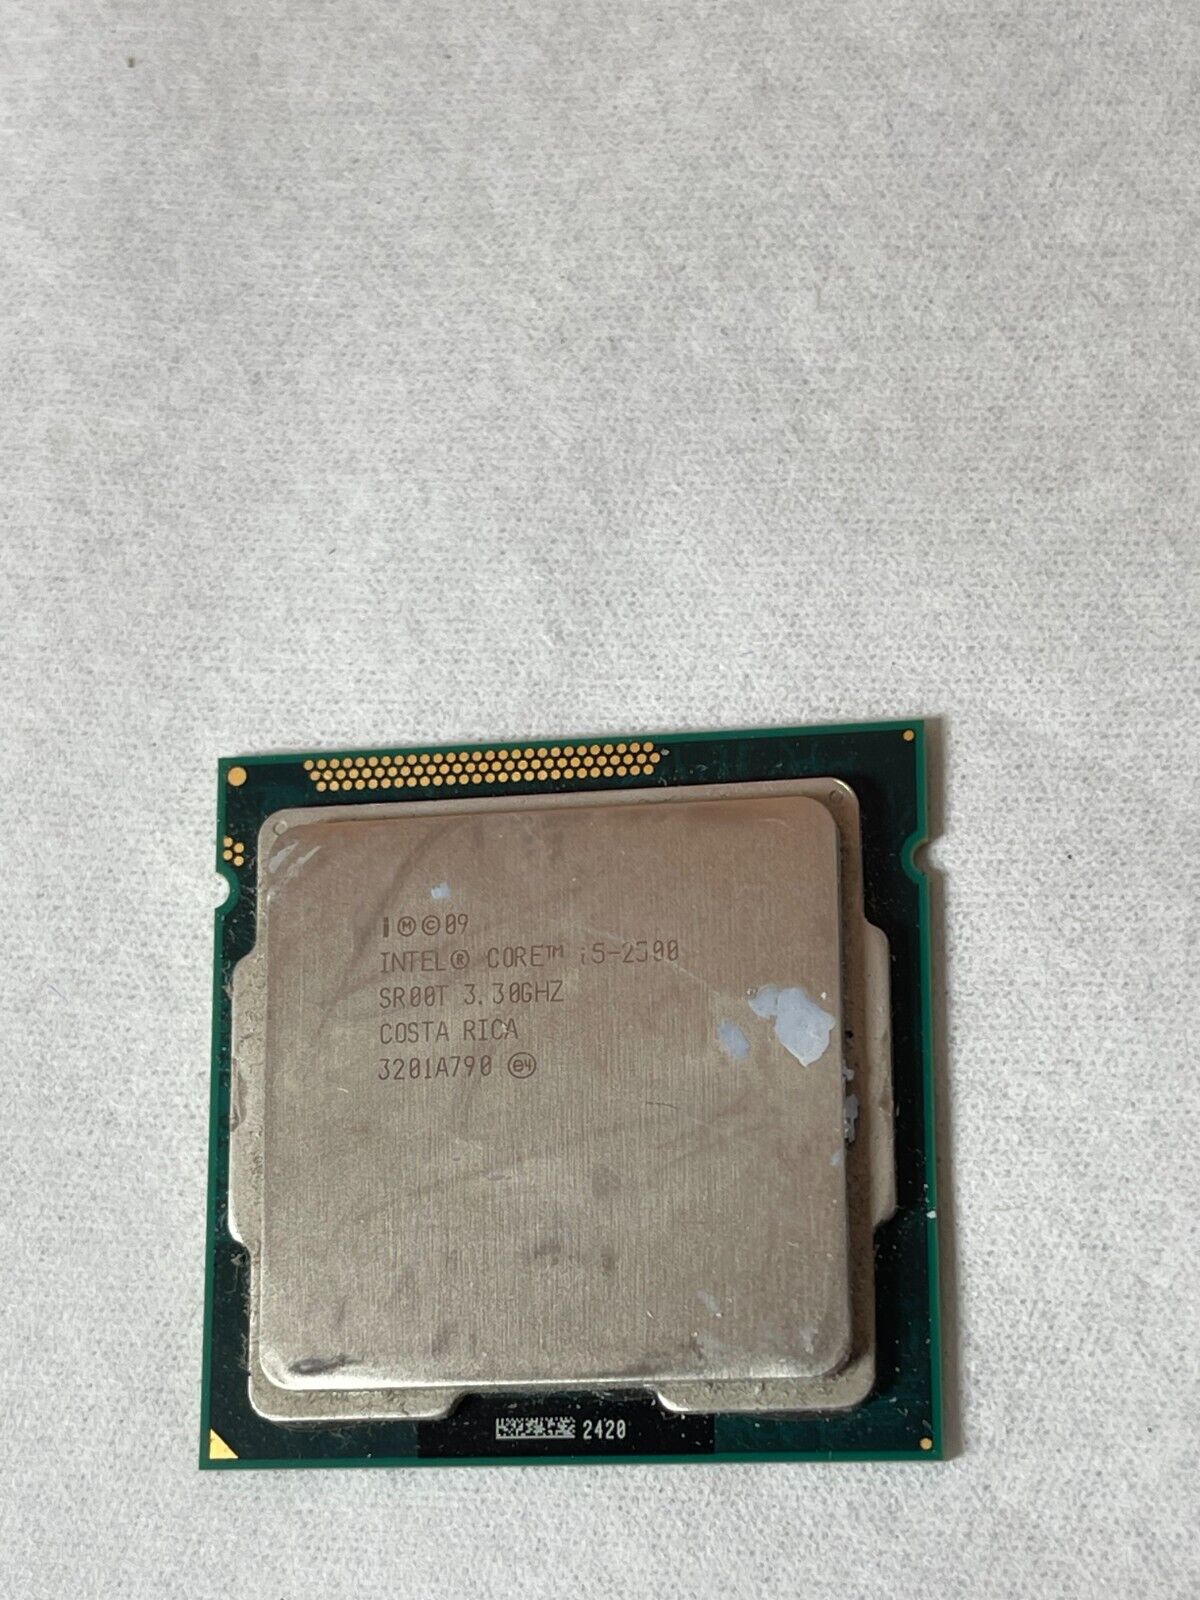 Intel i5-2500 3.3ghz Quad Core Socket 1155 CPU - SR00T